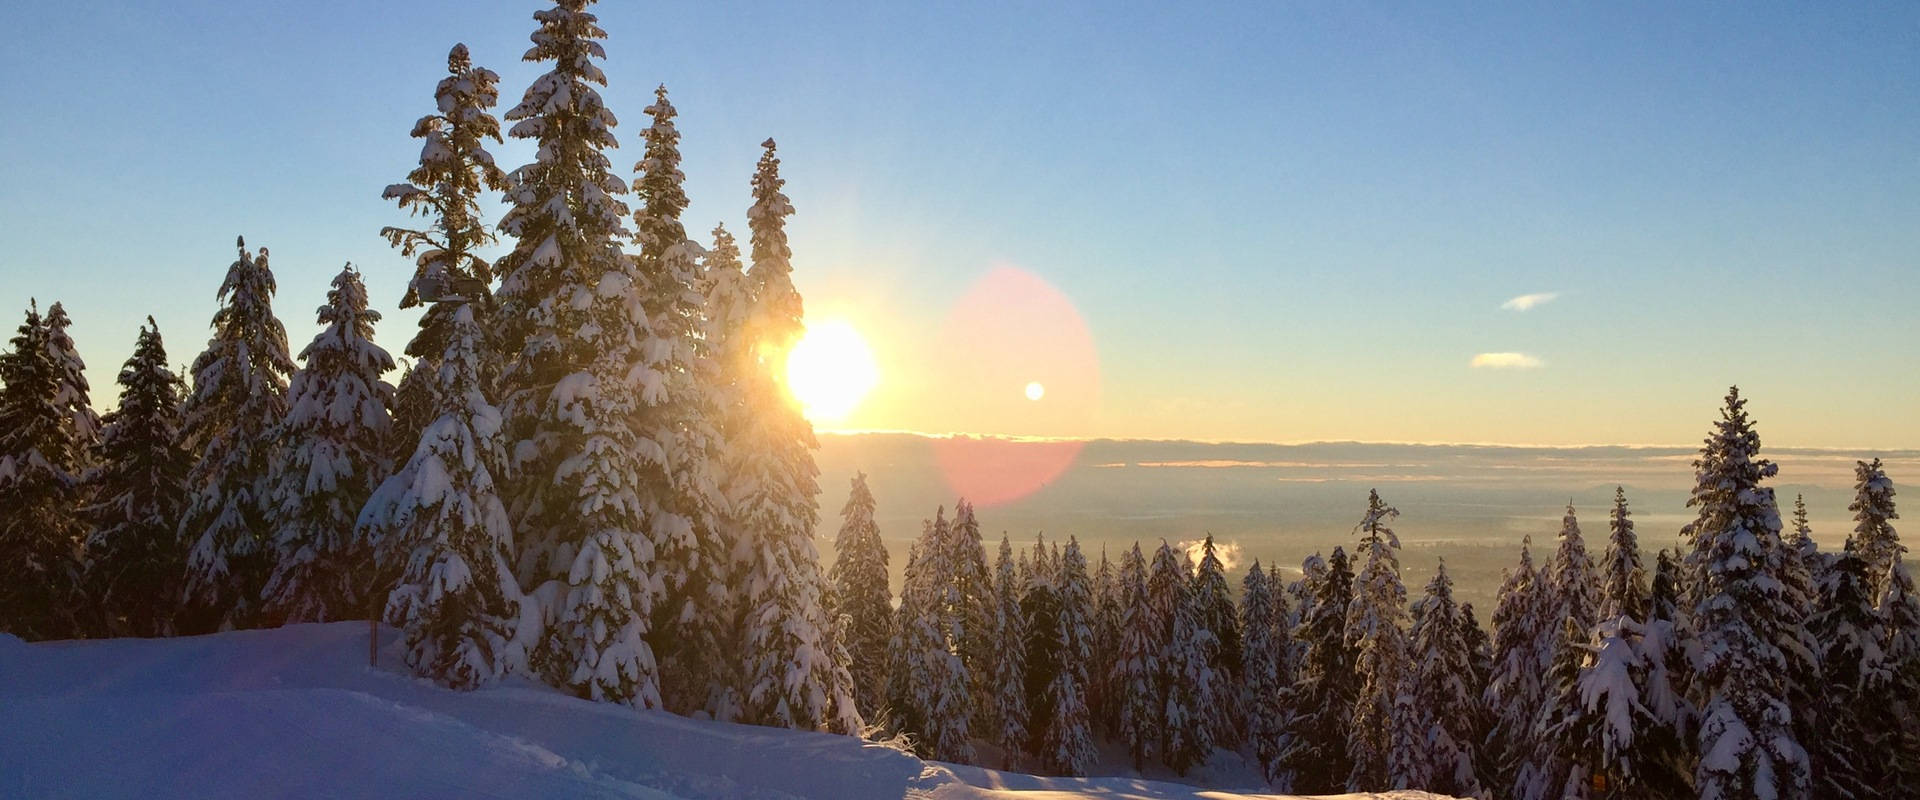 Winter Season Sun Glimpse Background